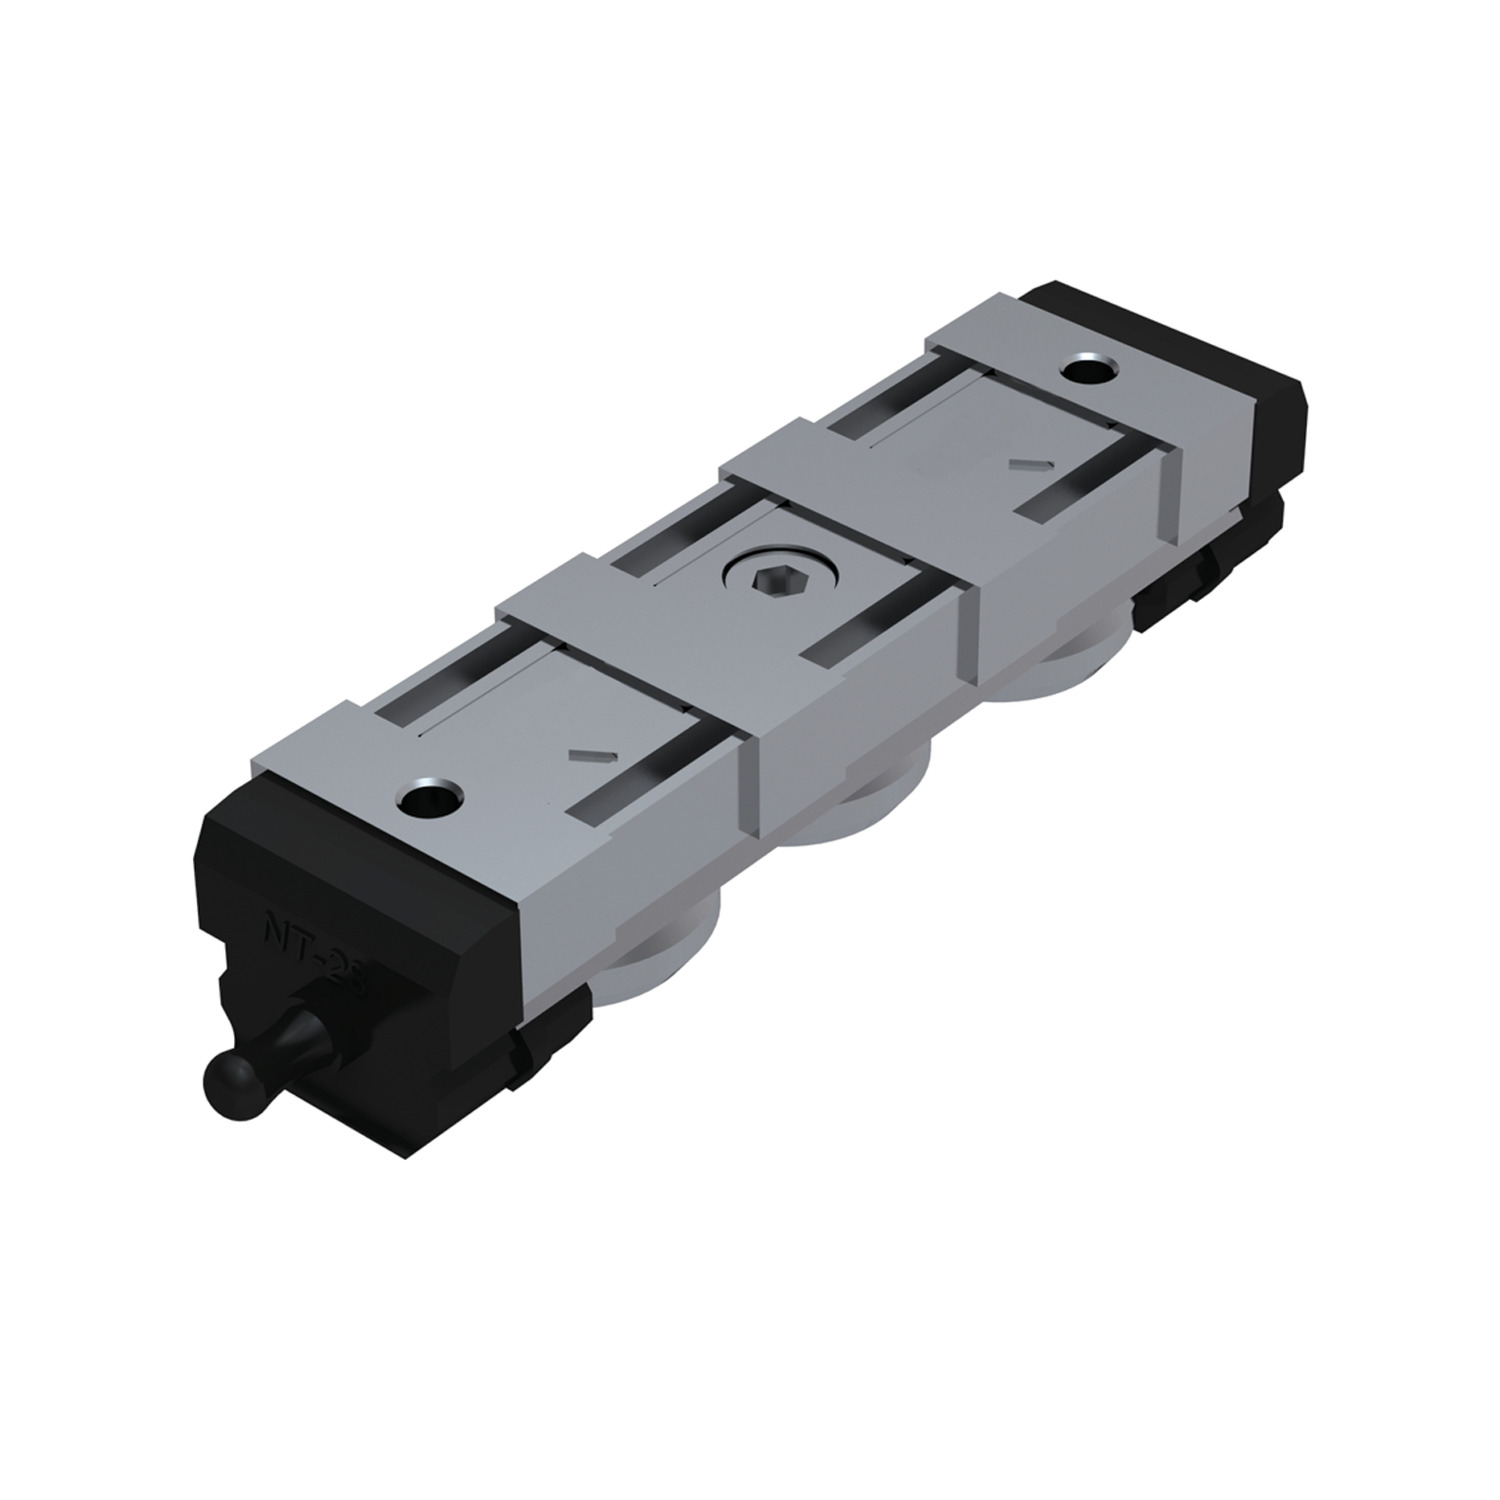 Product L1918.N, Light Duty Sliders, size 18 standard / 